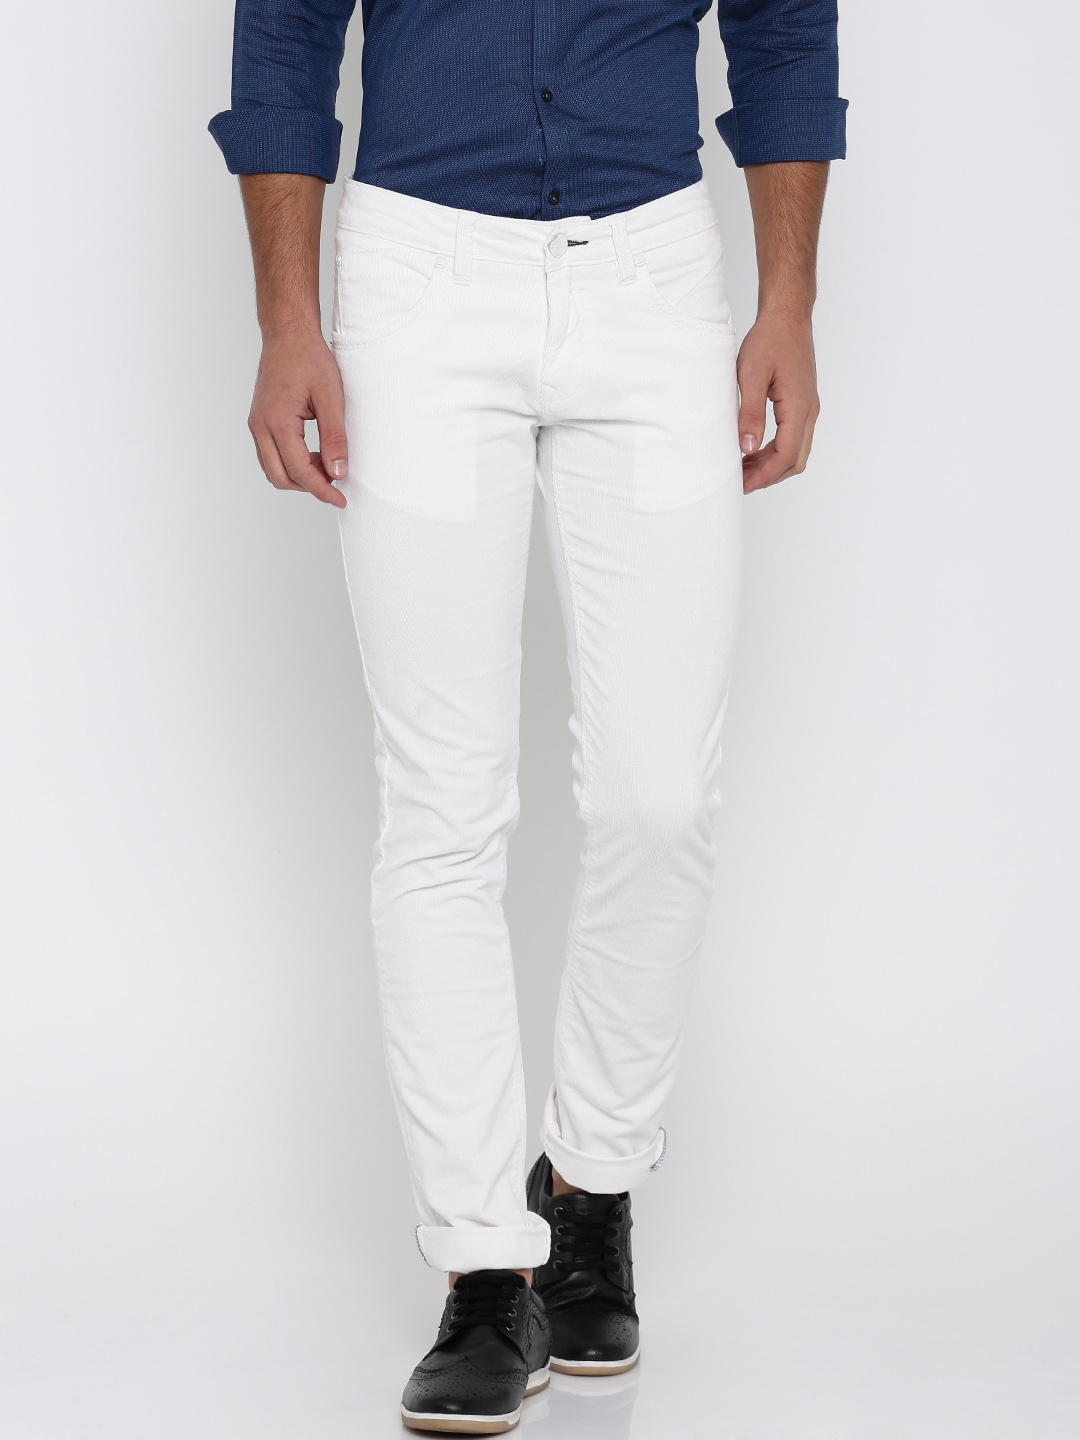 Buy Basics White Skinny Corduroy Trousers - Trousers for Men 1404494 ...